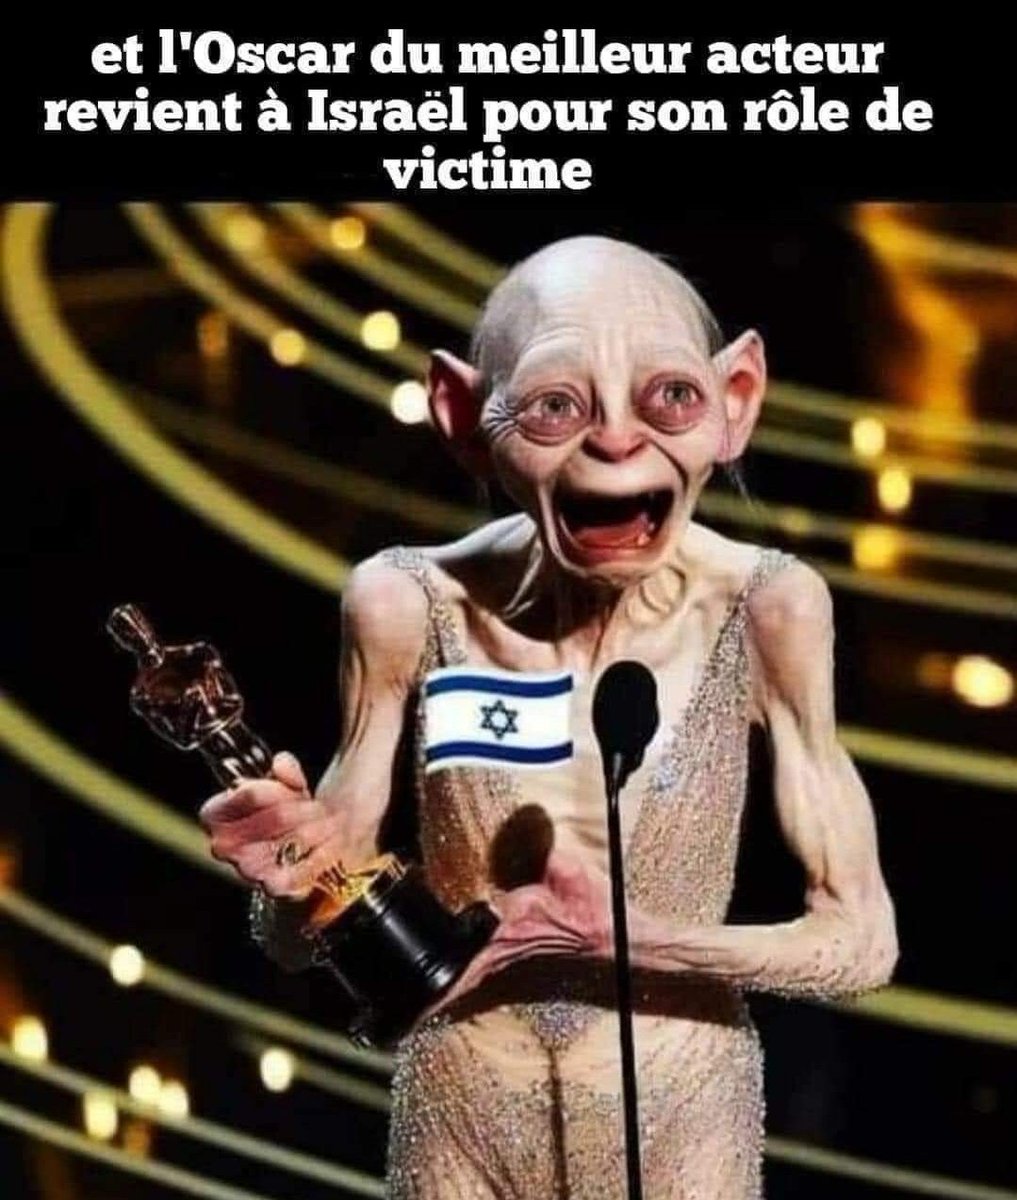 Courage #Israel, bientôt les #Oscars